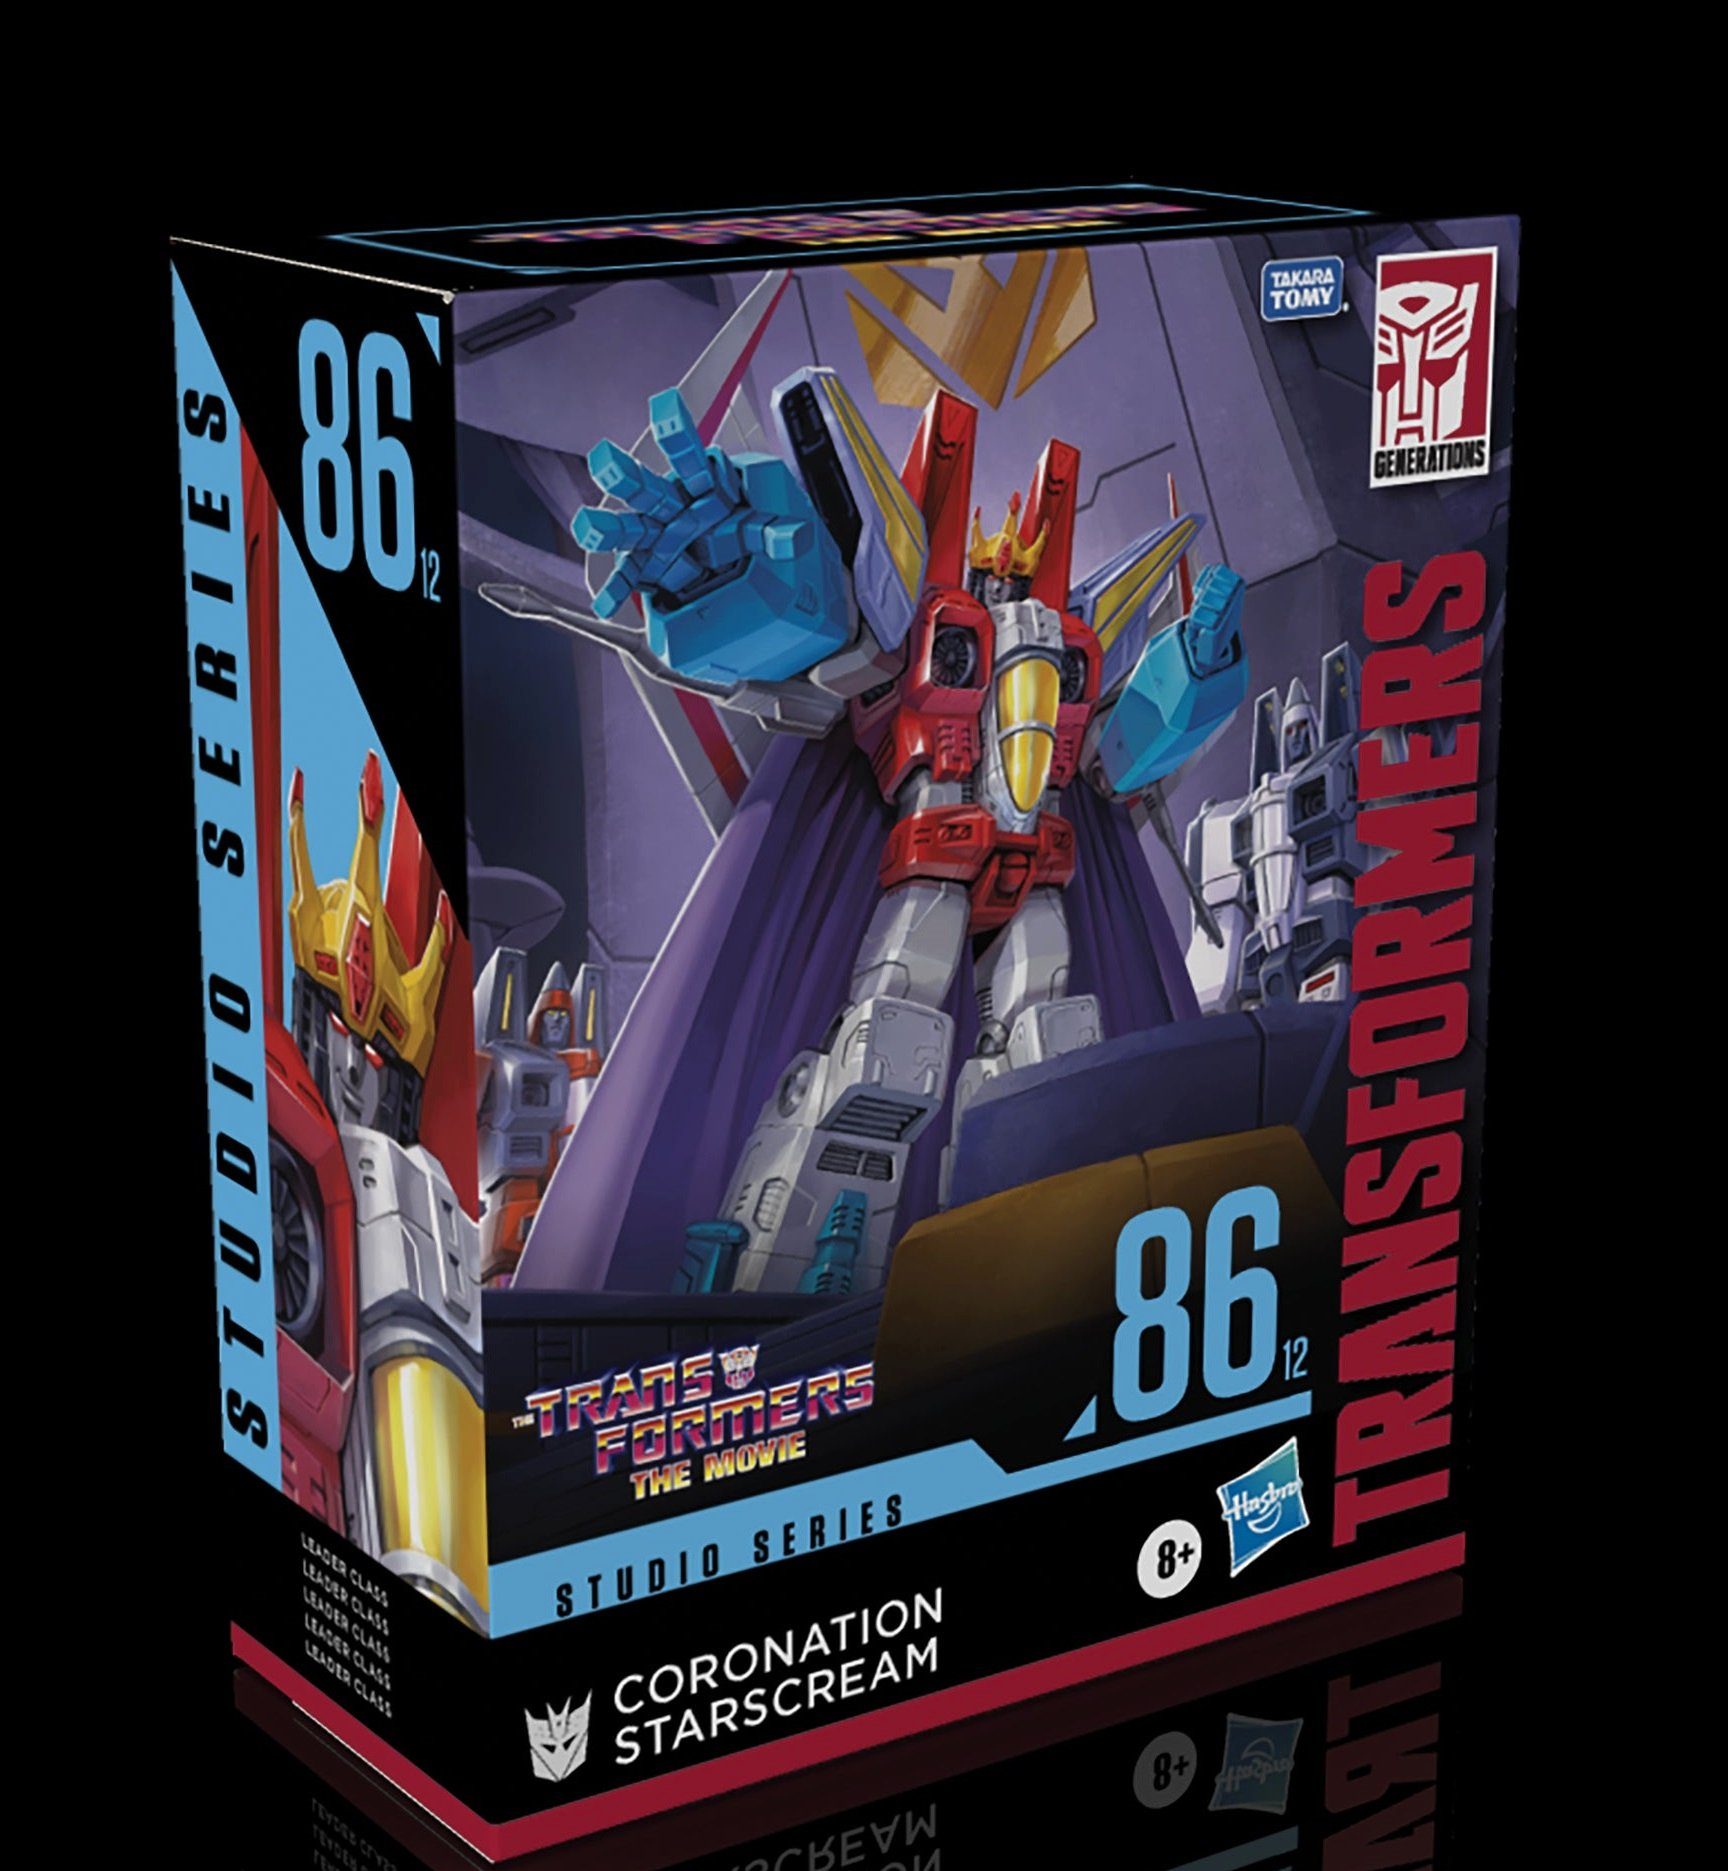 Series The 86-12 - Actionfigur - Starscream Movie Coronation Hasbro - Studio Class Transformers Leader